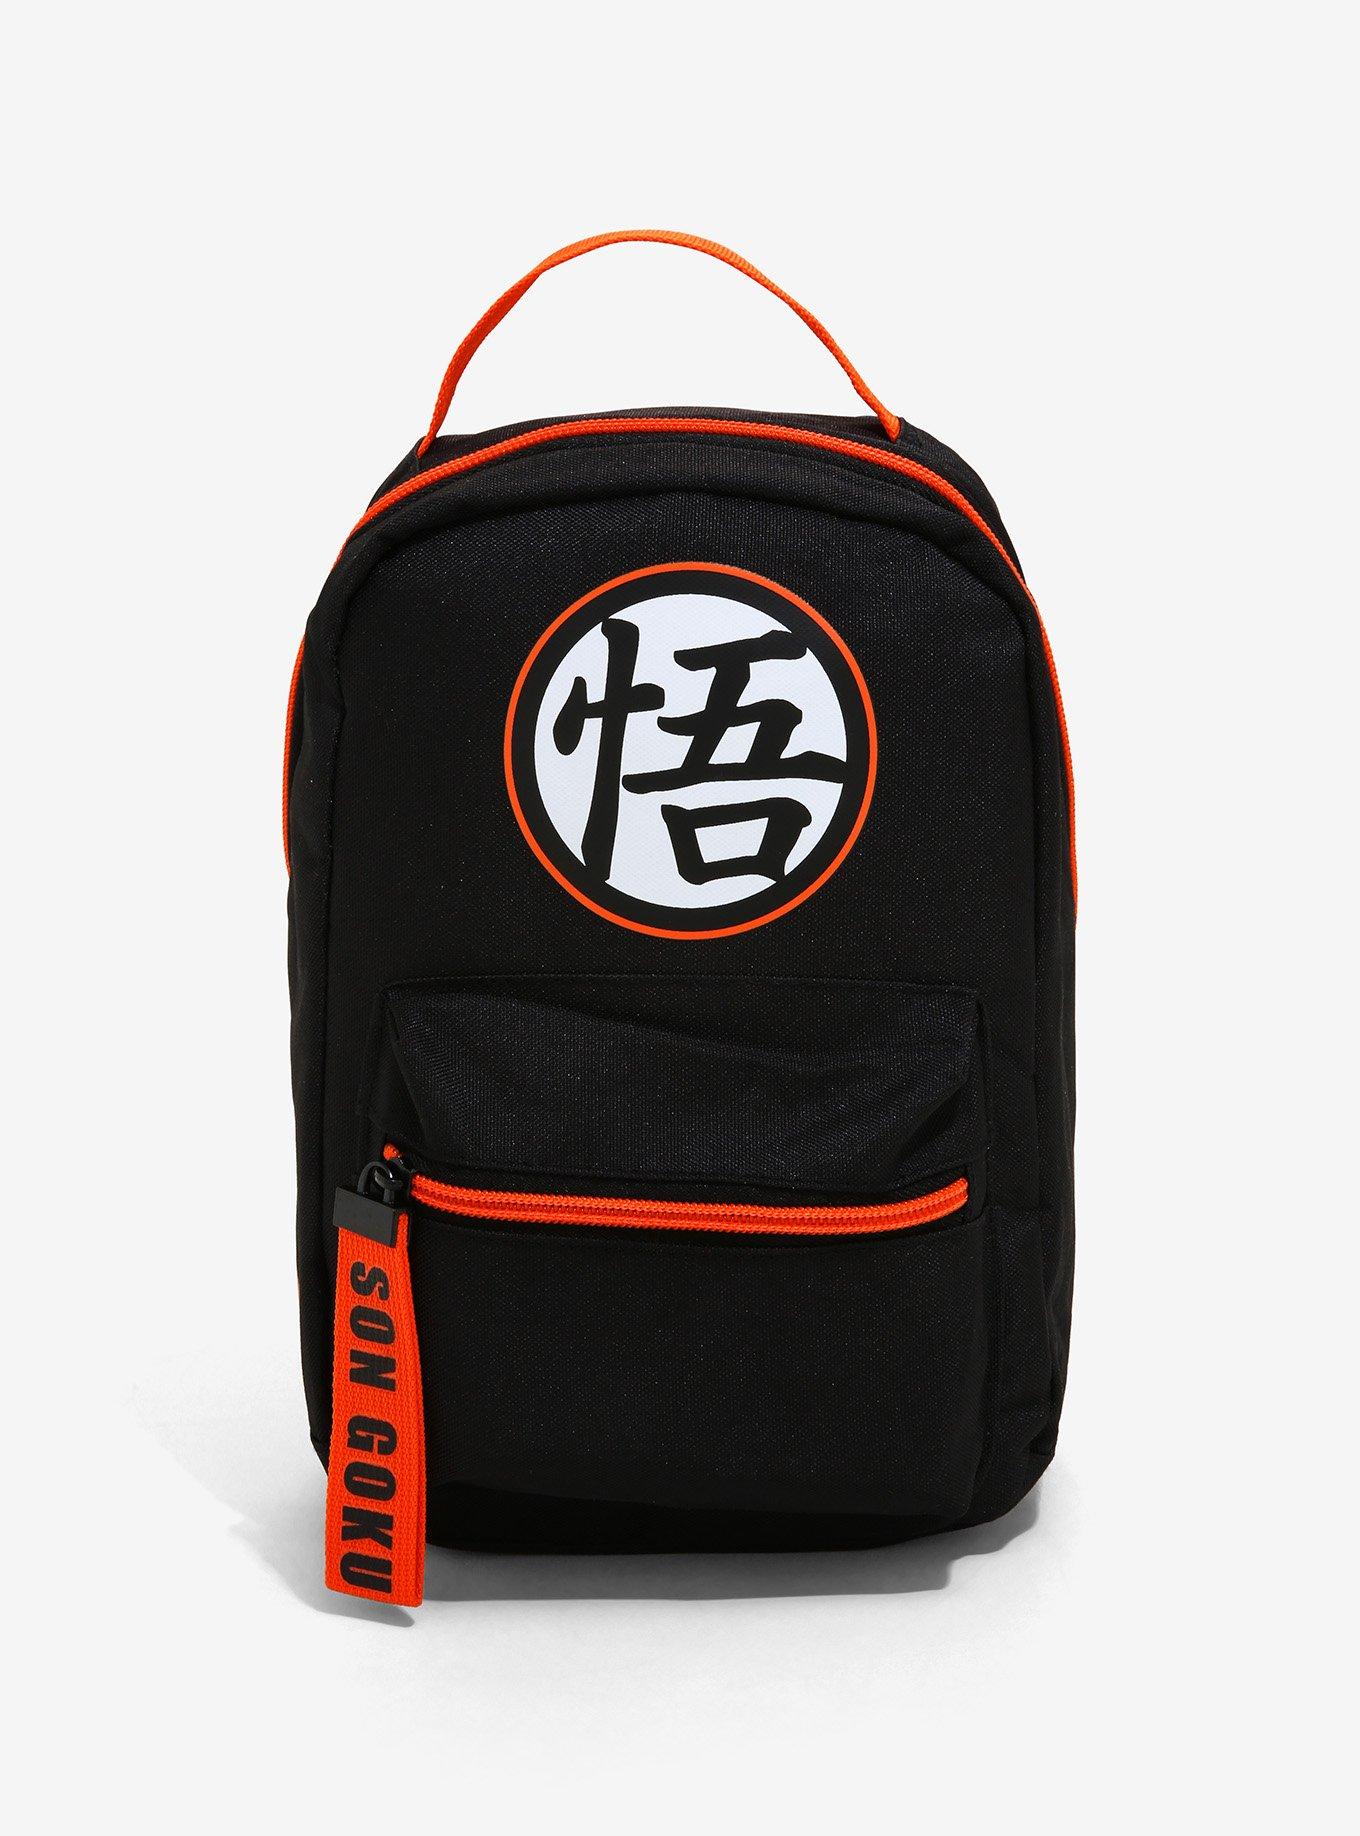 ANIME Dragon Ball Z Shoulder BAG SCHOOL BACKPACK Son Goku Orange Canvas GIFT